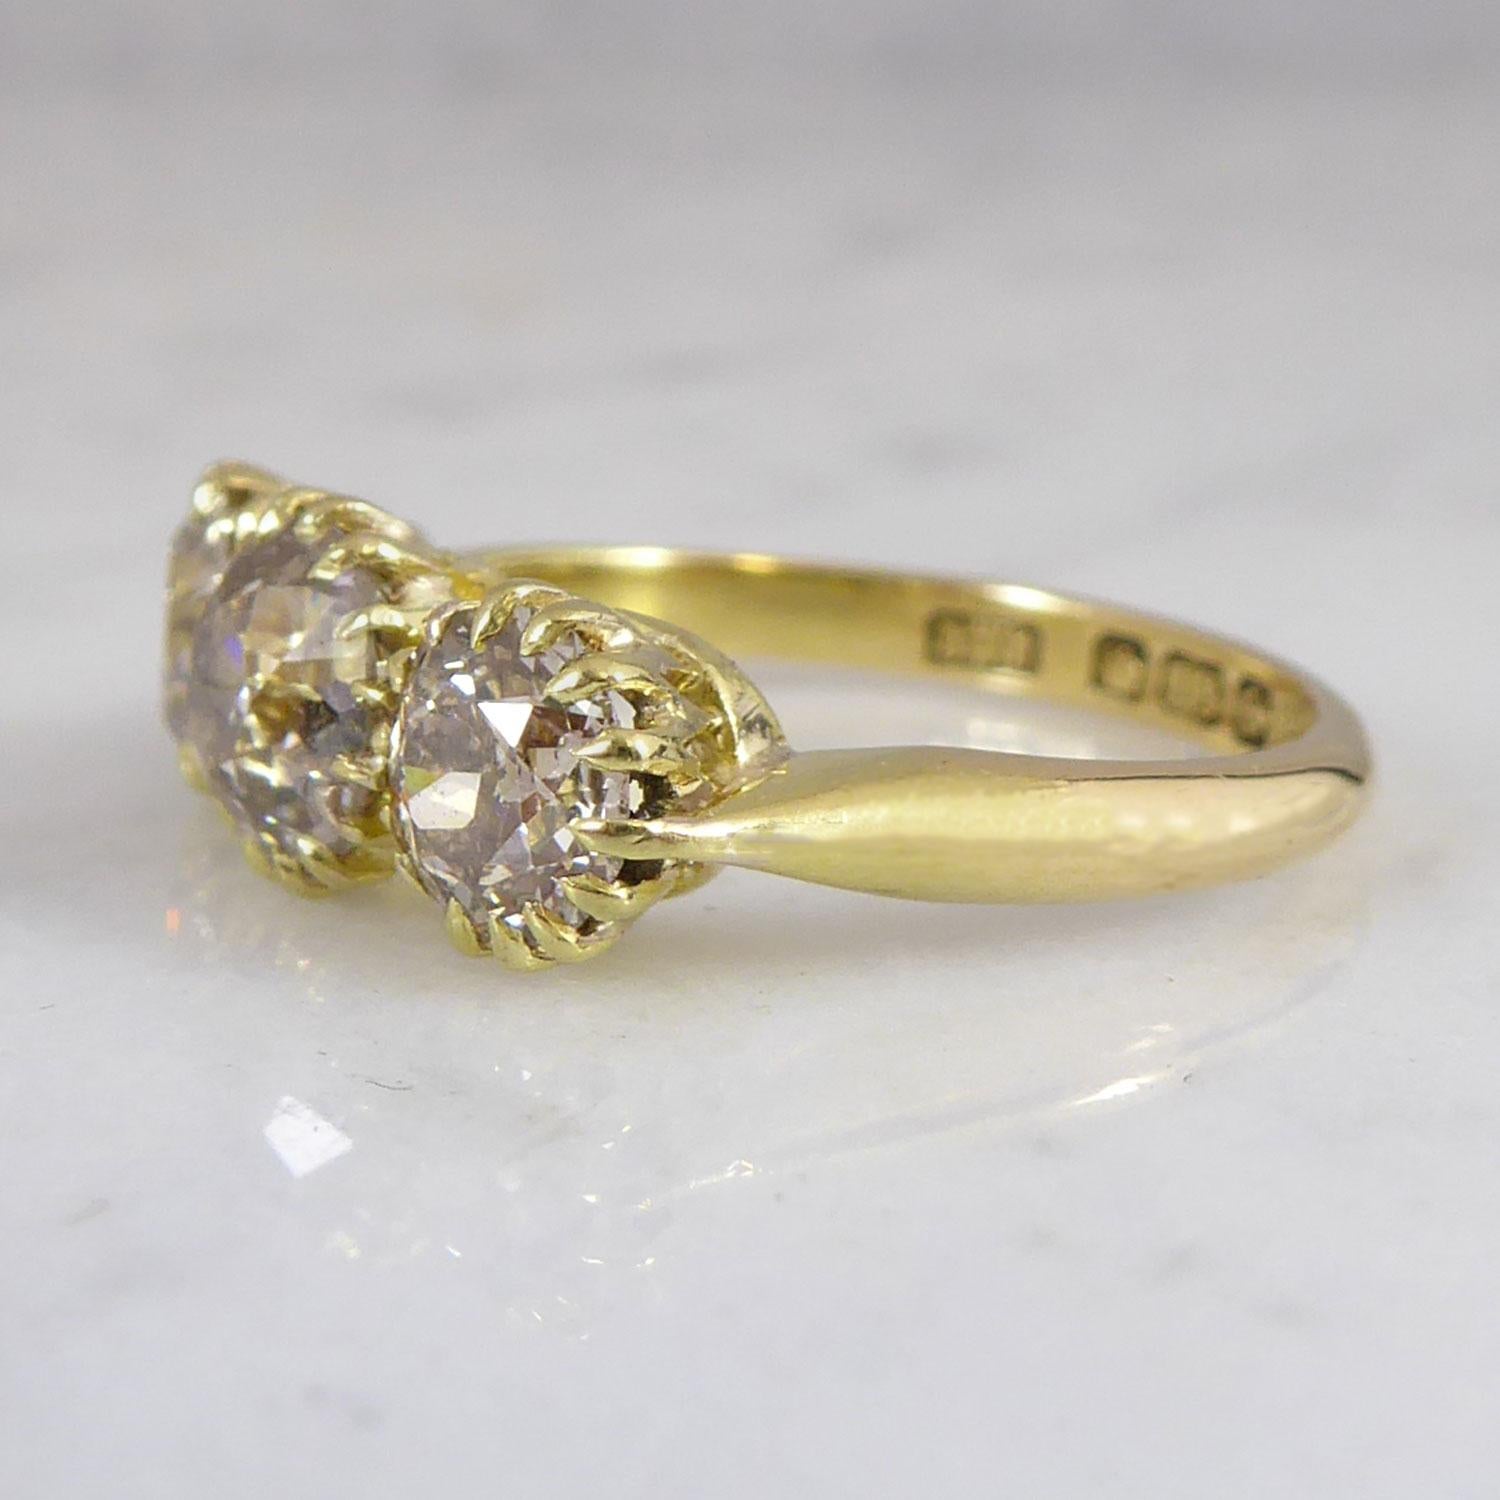 Antique Edwardian Diamond Ring 2.07 Carat, Hallmarked Birmingham, 1906-1907 1